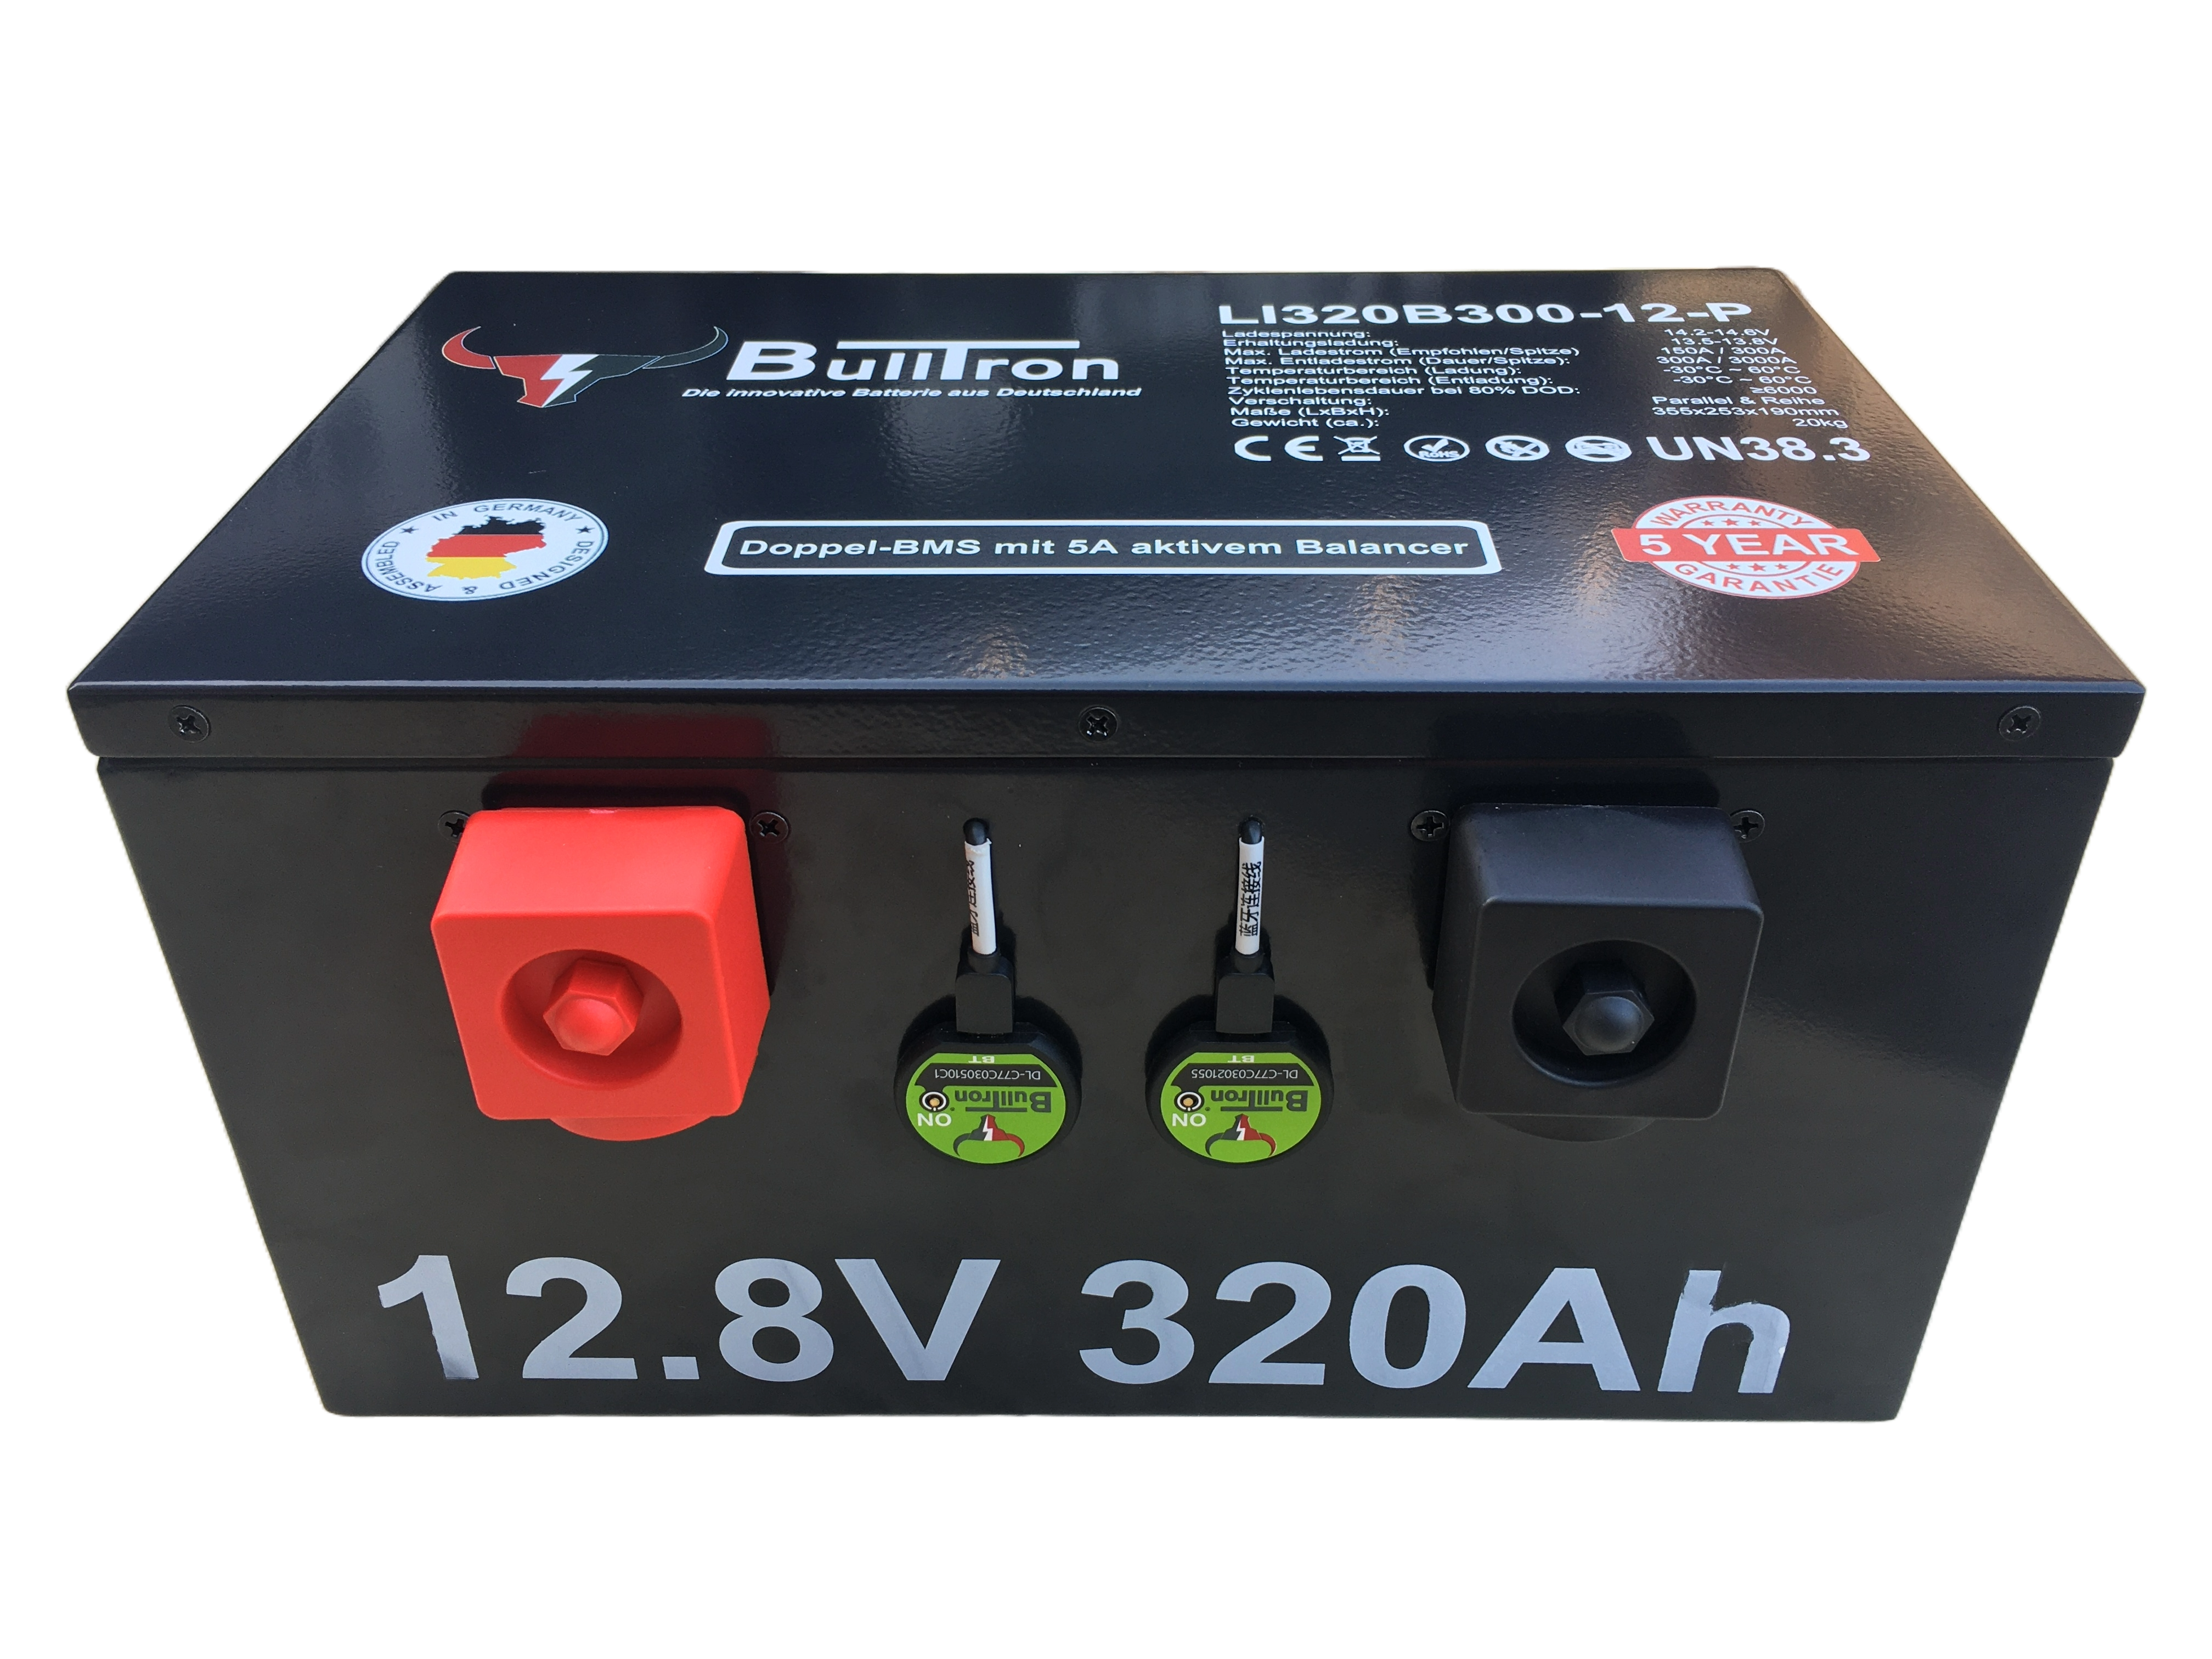 Bulltron 320Ah Polar LiFePO4 12.8V Akku mit Heizung, Smart Doppel-BMS und Bluetooth App